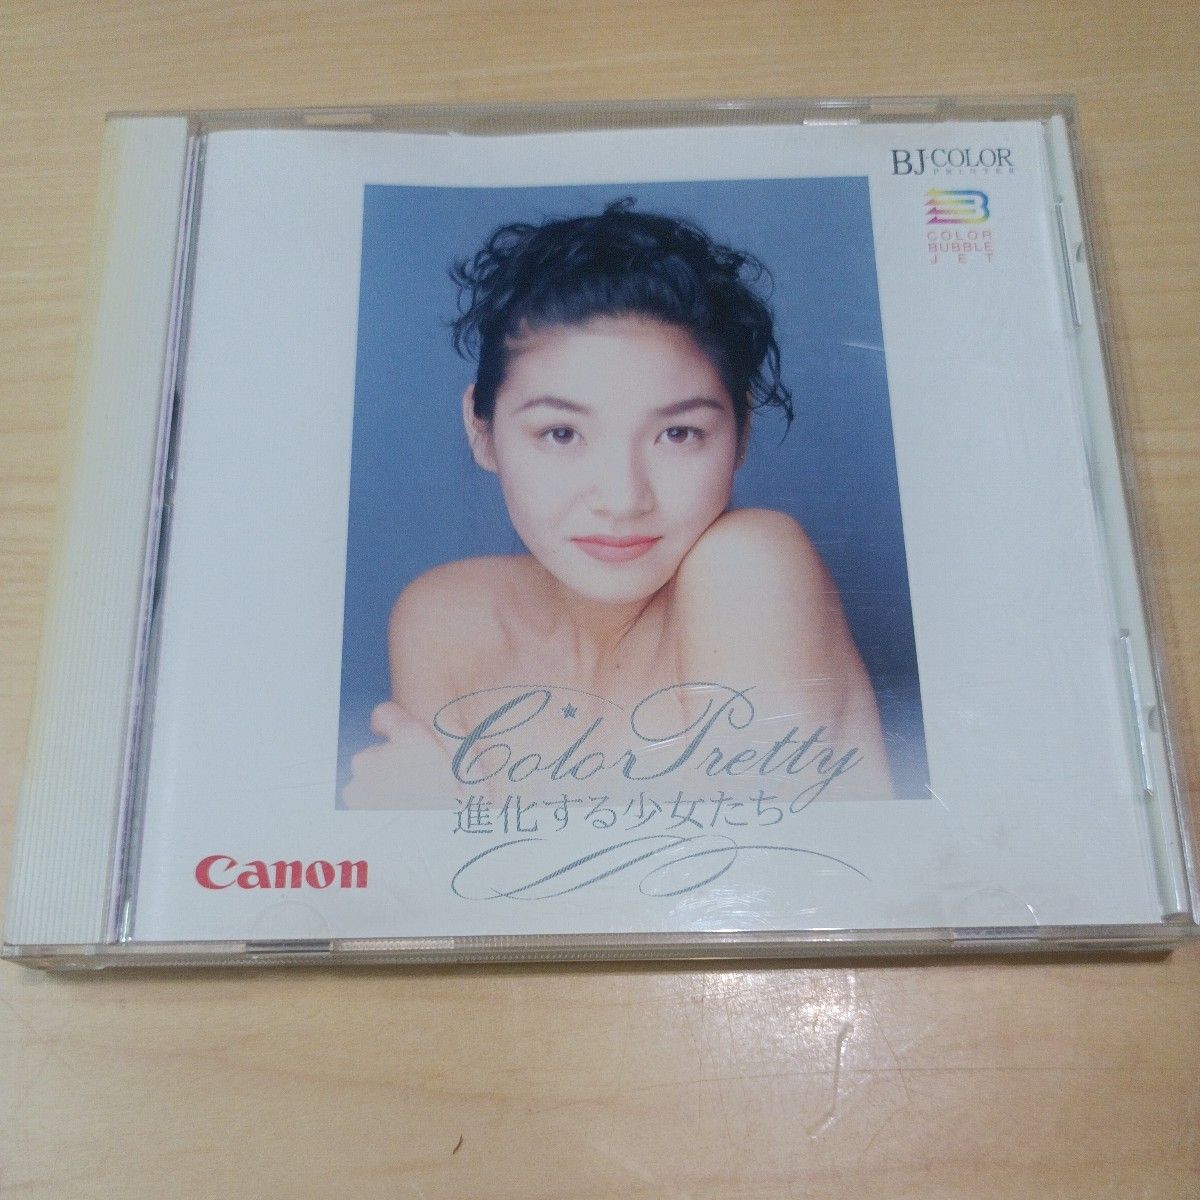 Canon ColorPretty 進化する少女たち hybrid CD-ROM Windows3.1